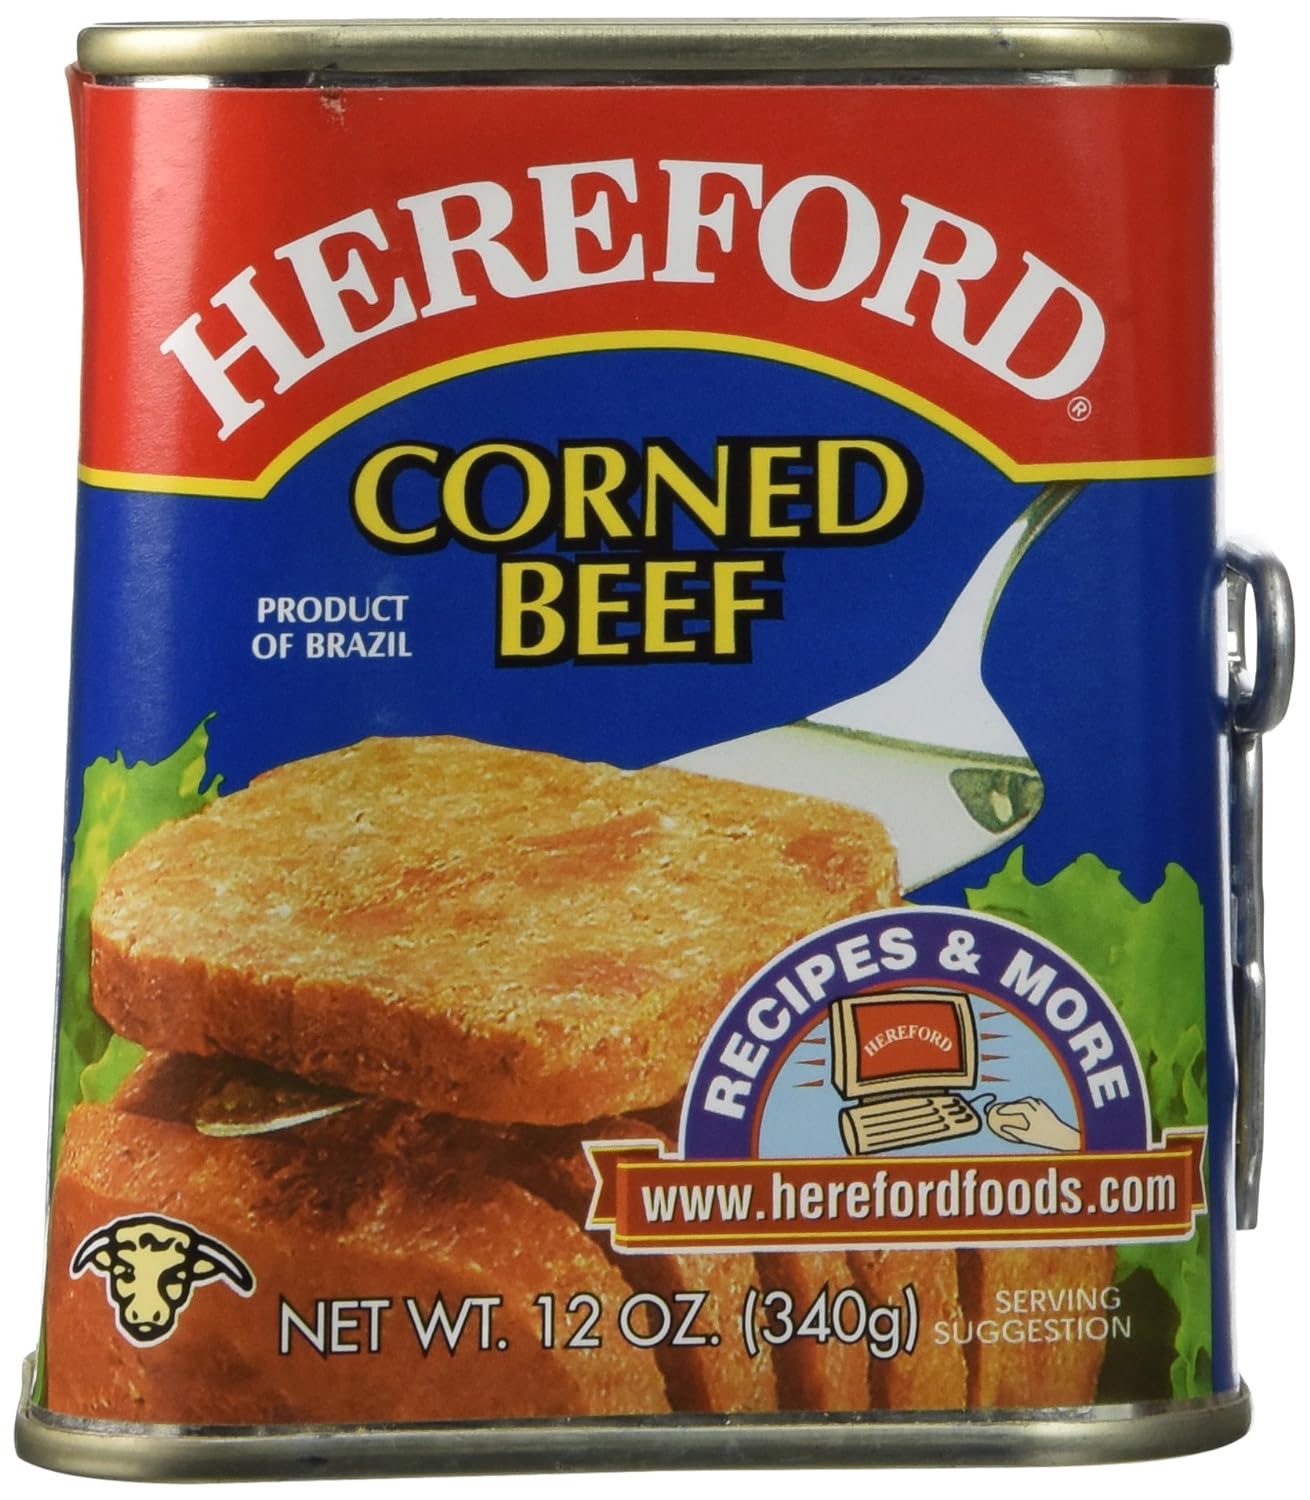 HERTFORD CORNED BEEF 24 CAN /12OZ